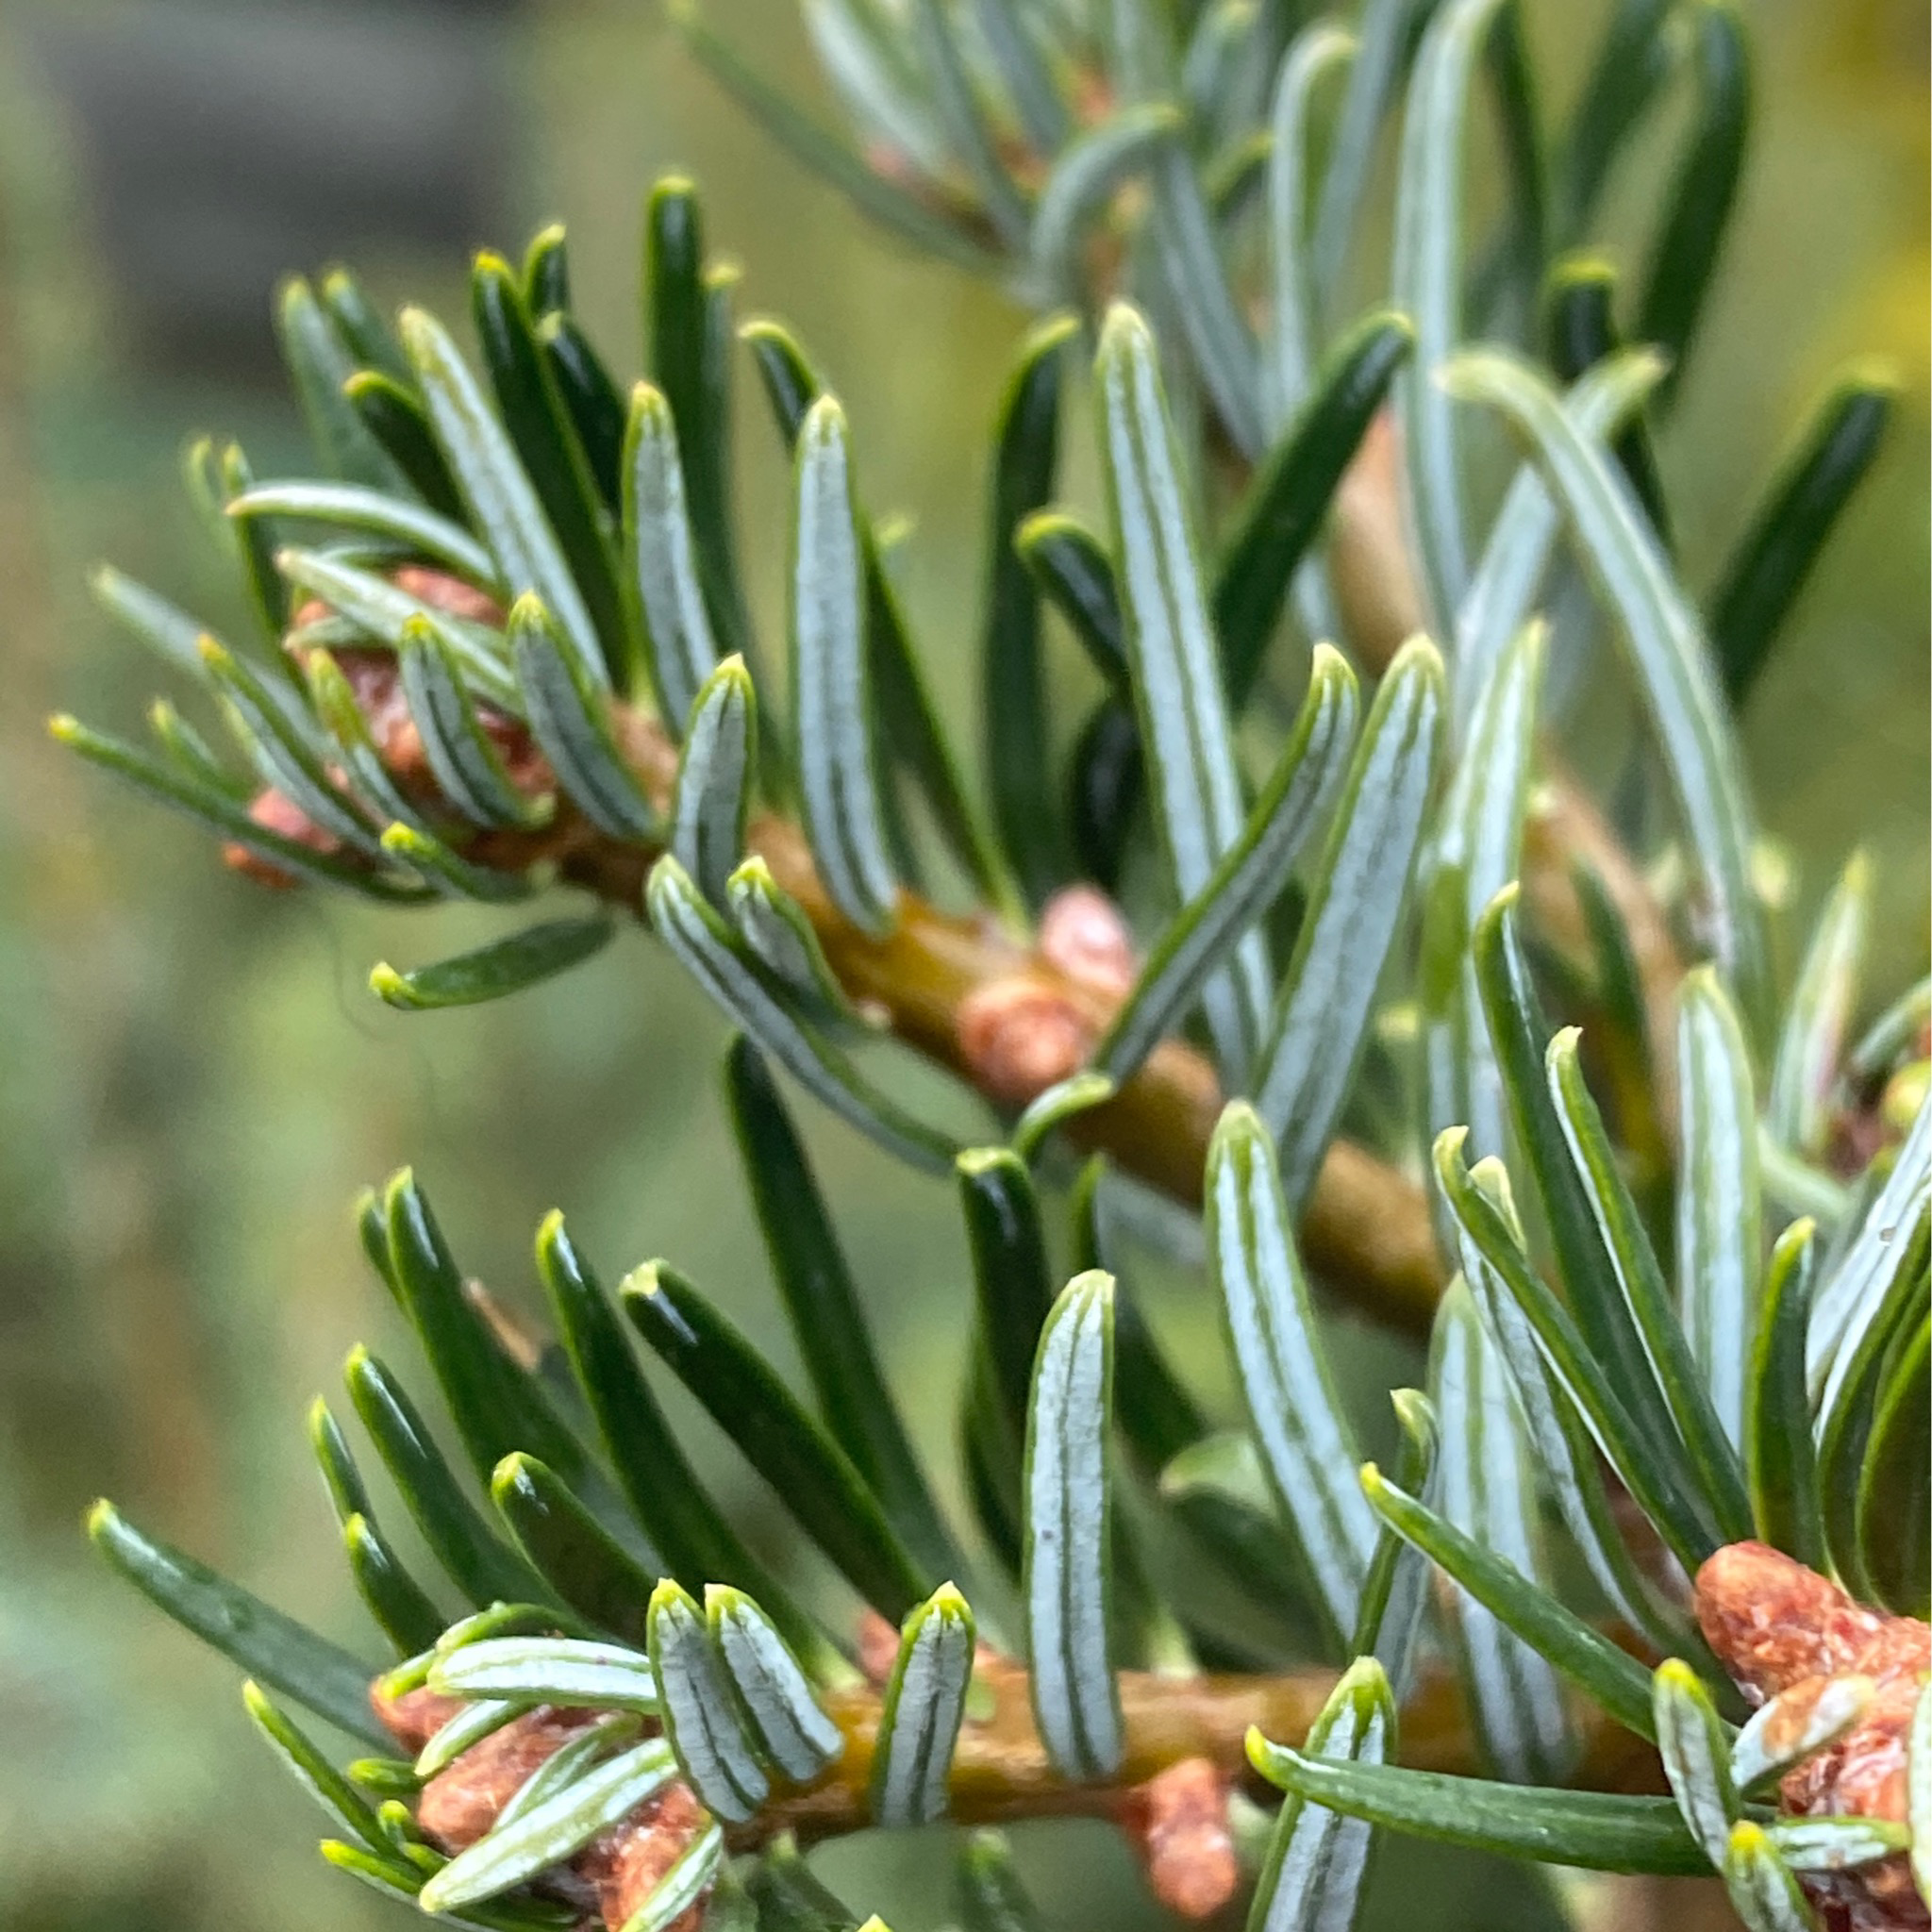 Acer macrophyllum - Bigleaf Maple - Plantas nativa LLC - Online